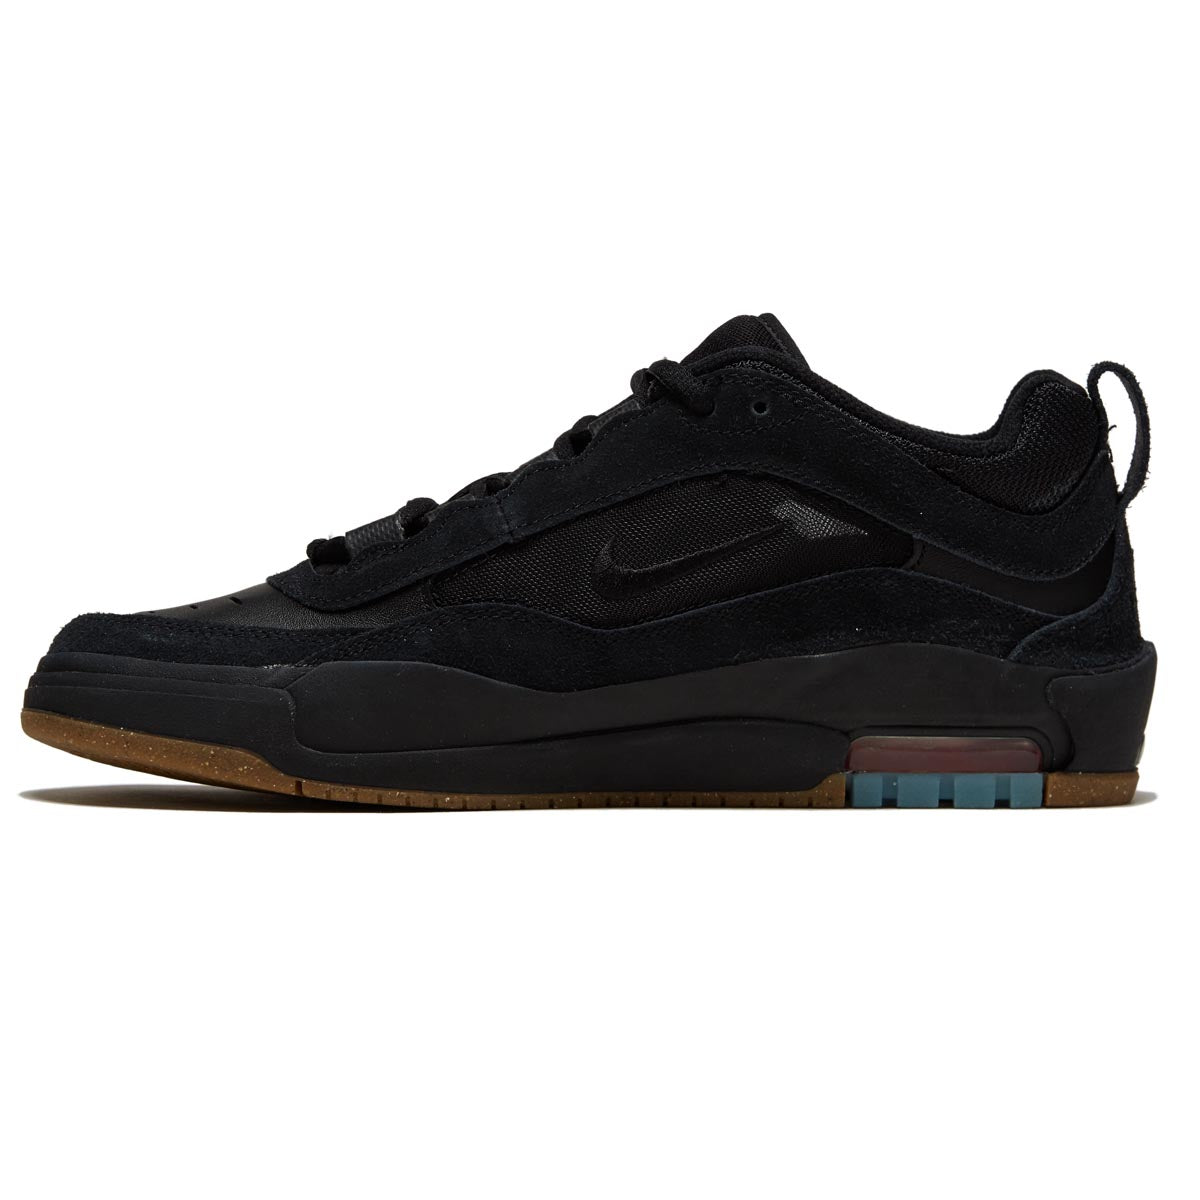 Nike SB Air Max Ishod Shoes - Black/Black/Anthracite/Black image 2